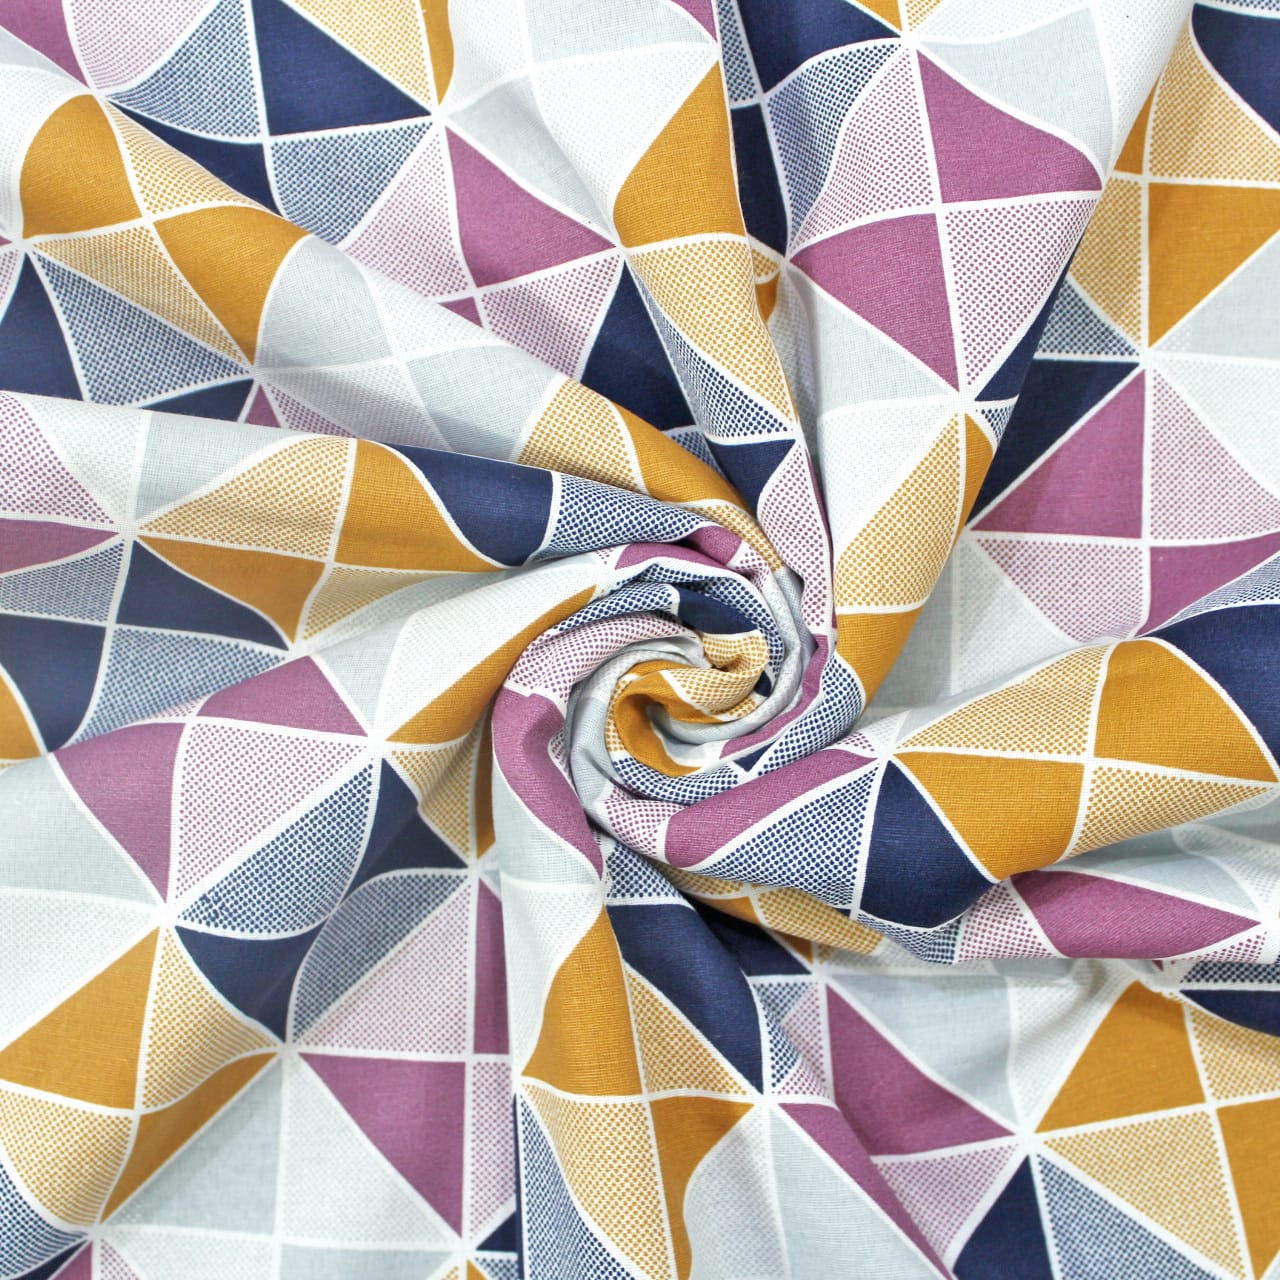 Soft Multicolor Cotton Reversible Dohar with Iris Designer Border At Best Prices